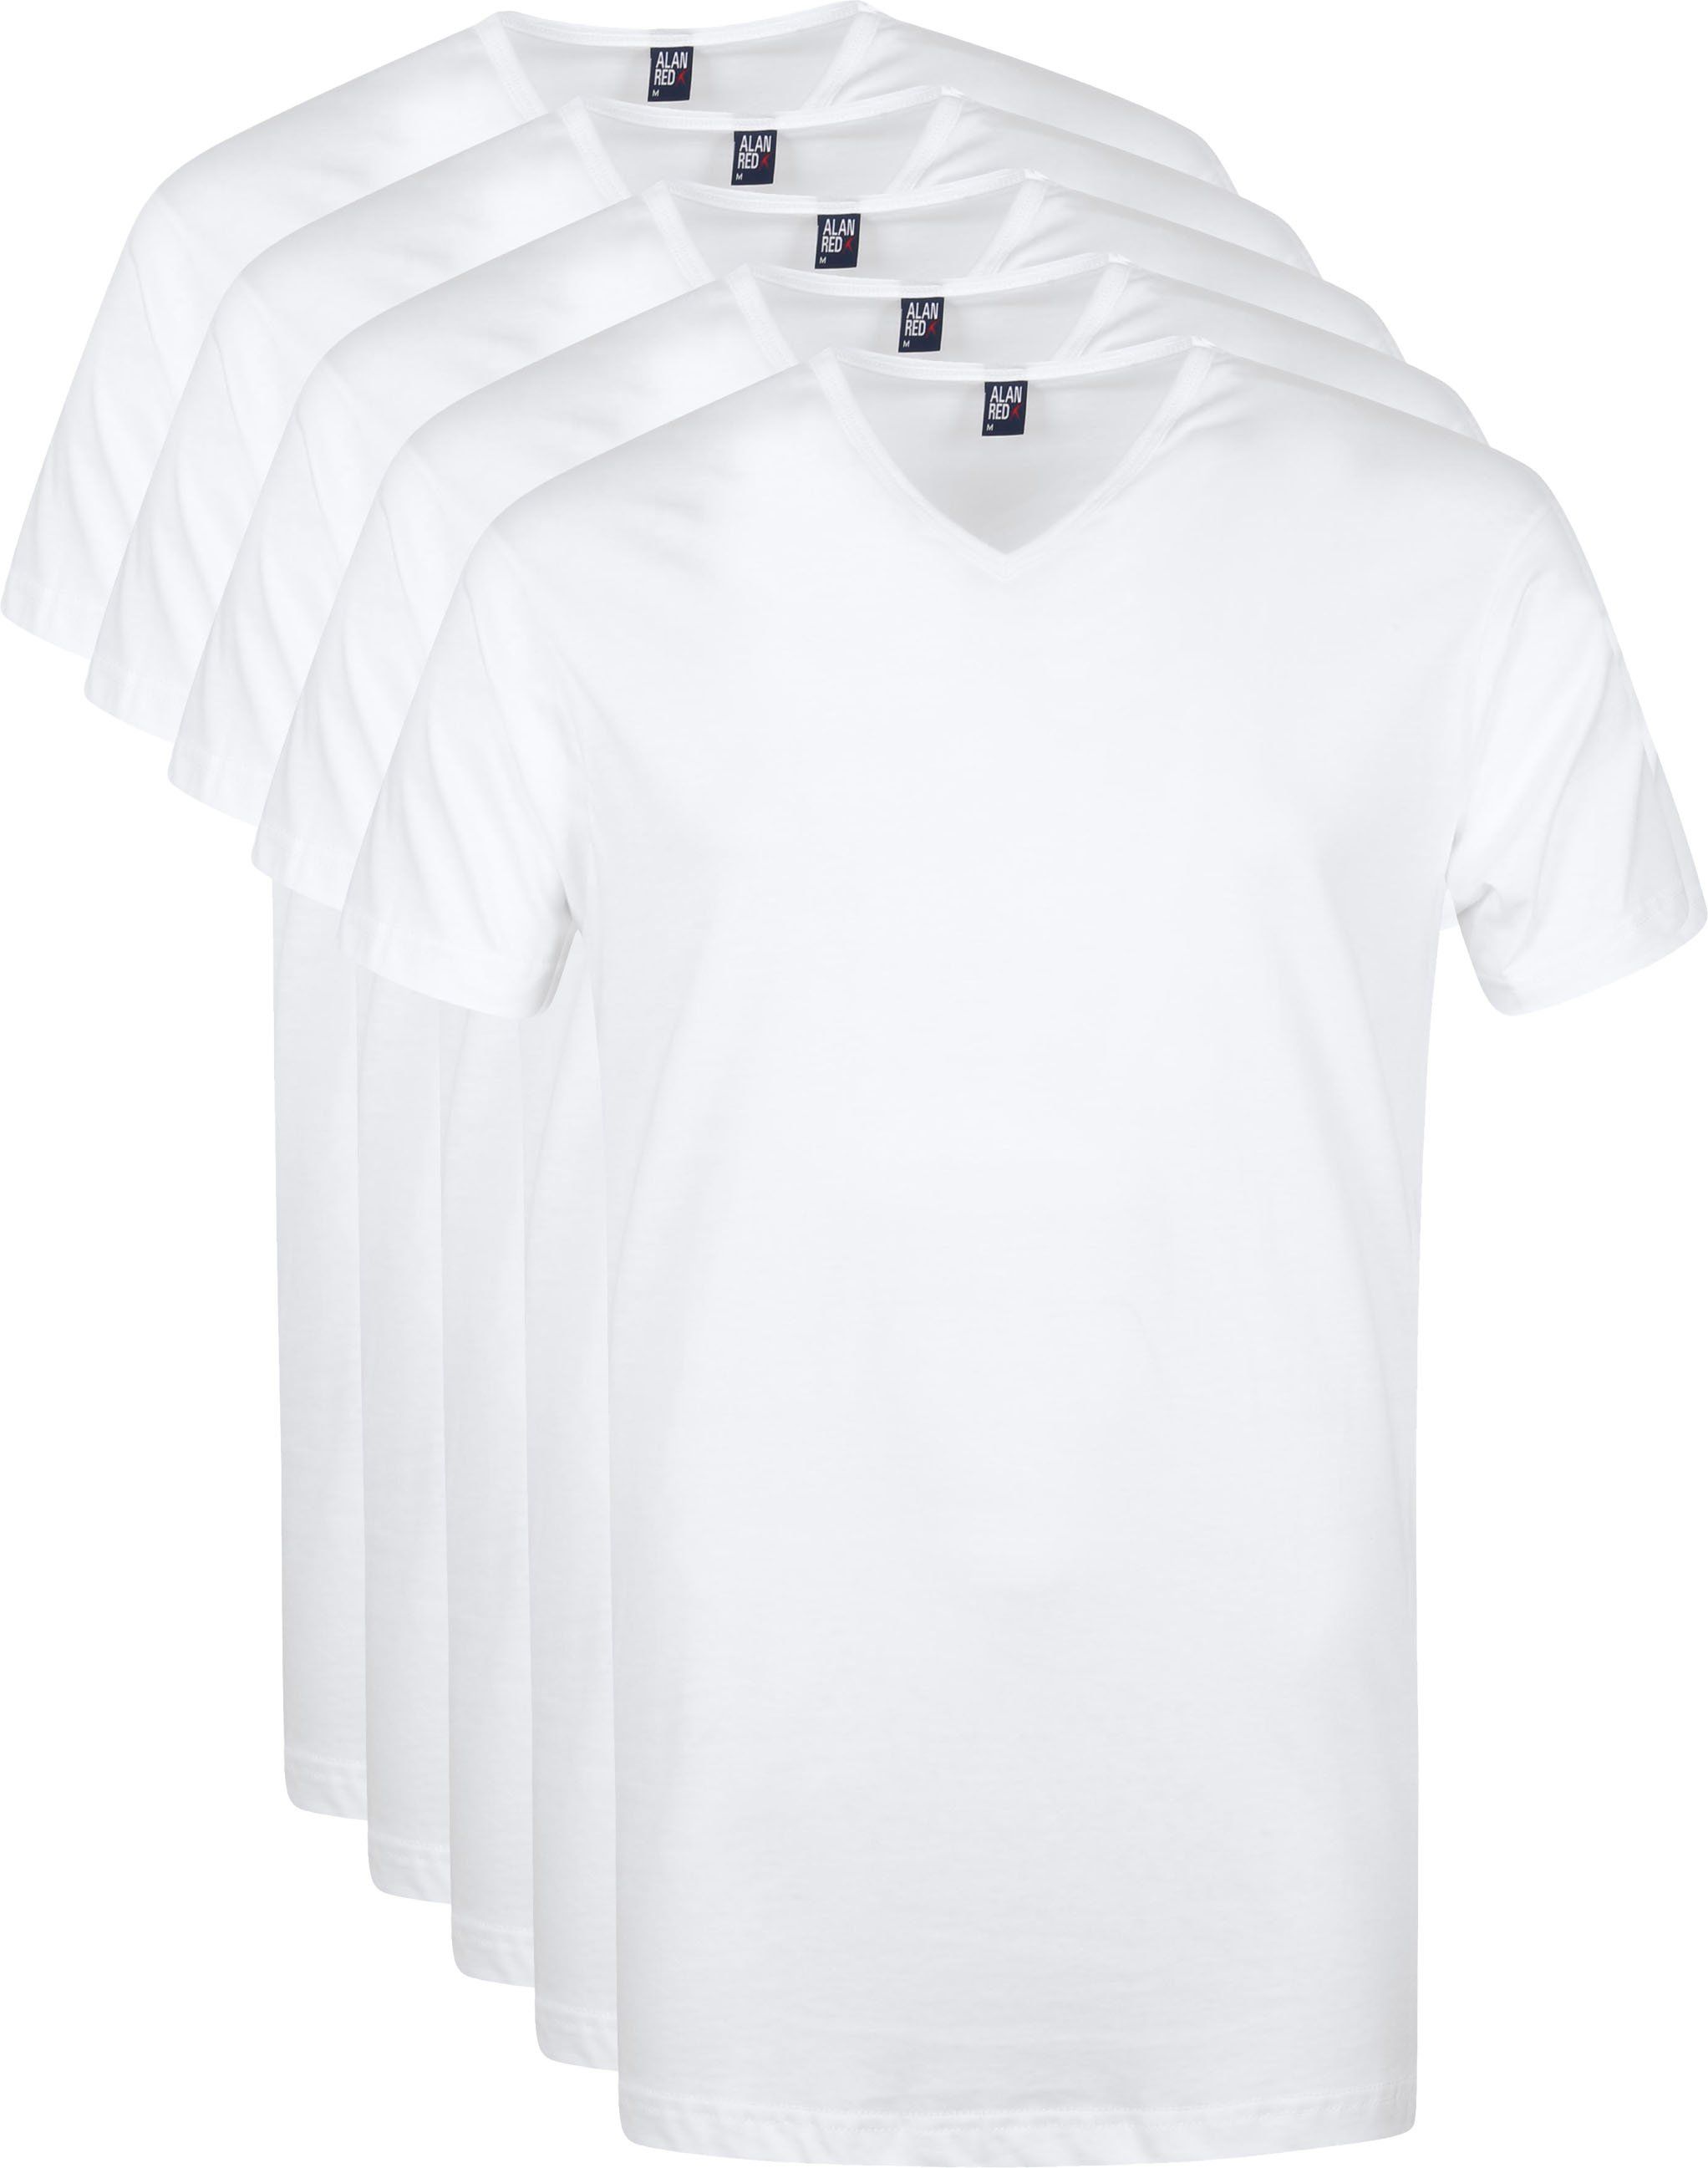 Alan Red Vermont T-Shirt V-Neck 5 Pack White size M